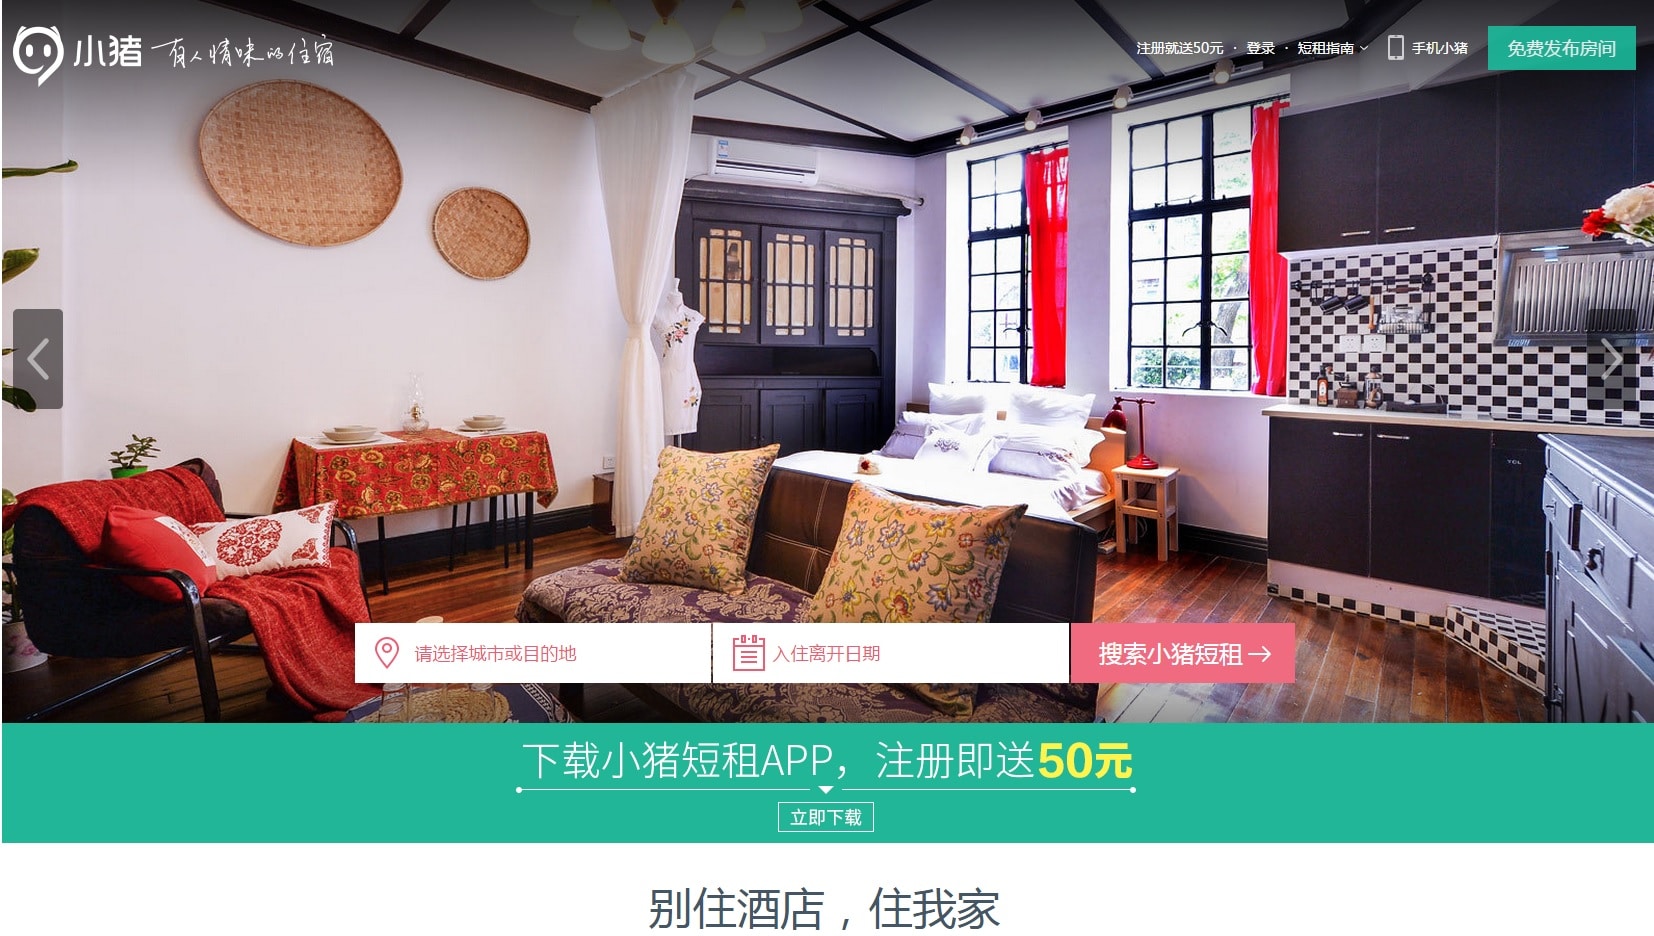 Xiaozu-airbnb-startup-sharing-economy-china-innovation-tech-startup